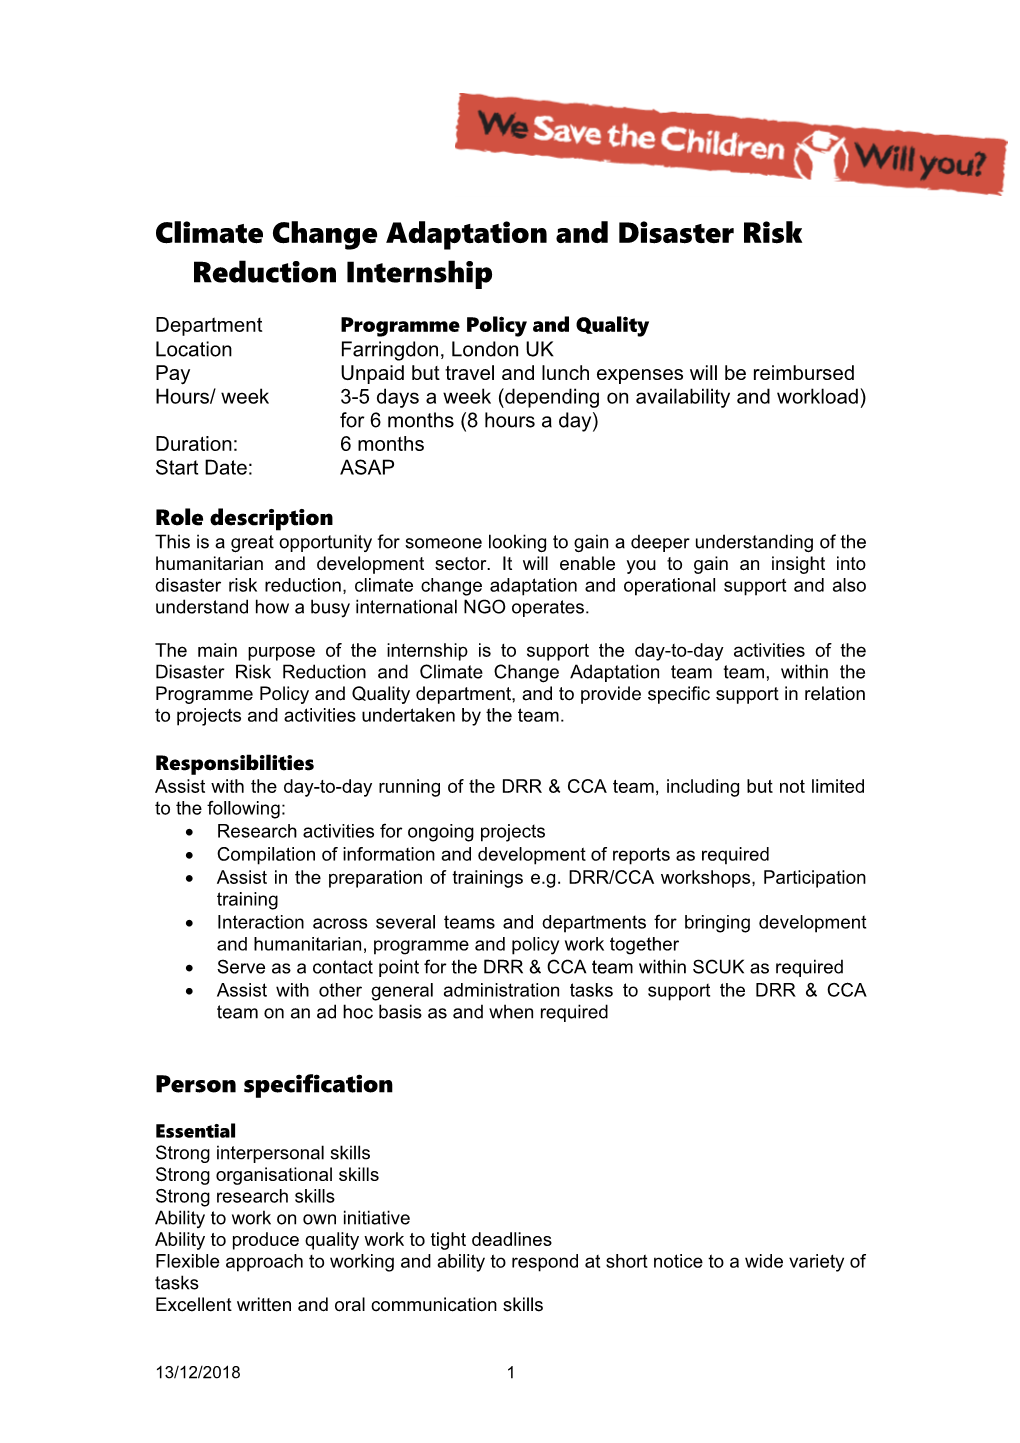 Climate Change Adaptation and Disaster Risk Reductioninternship